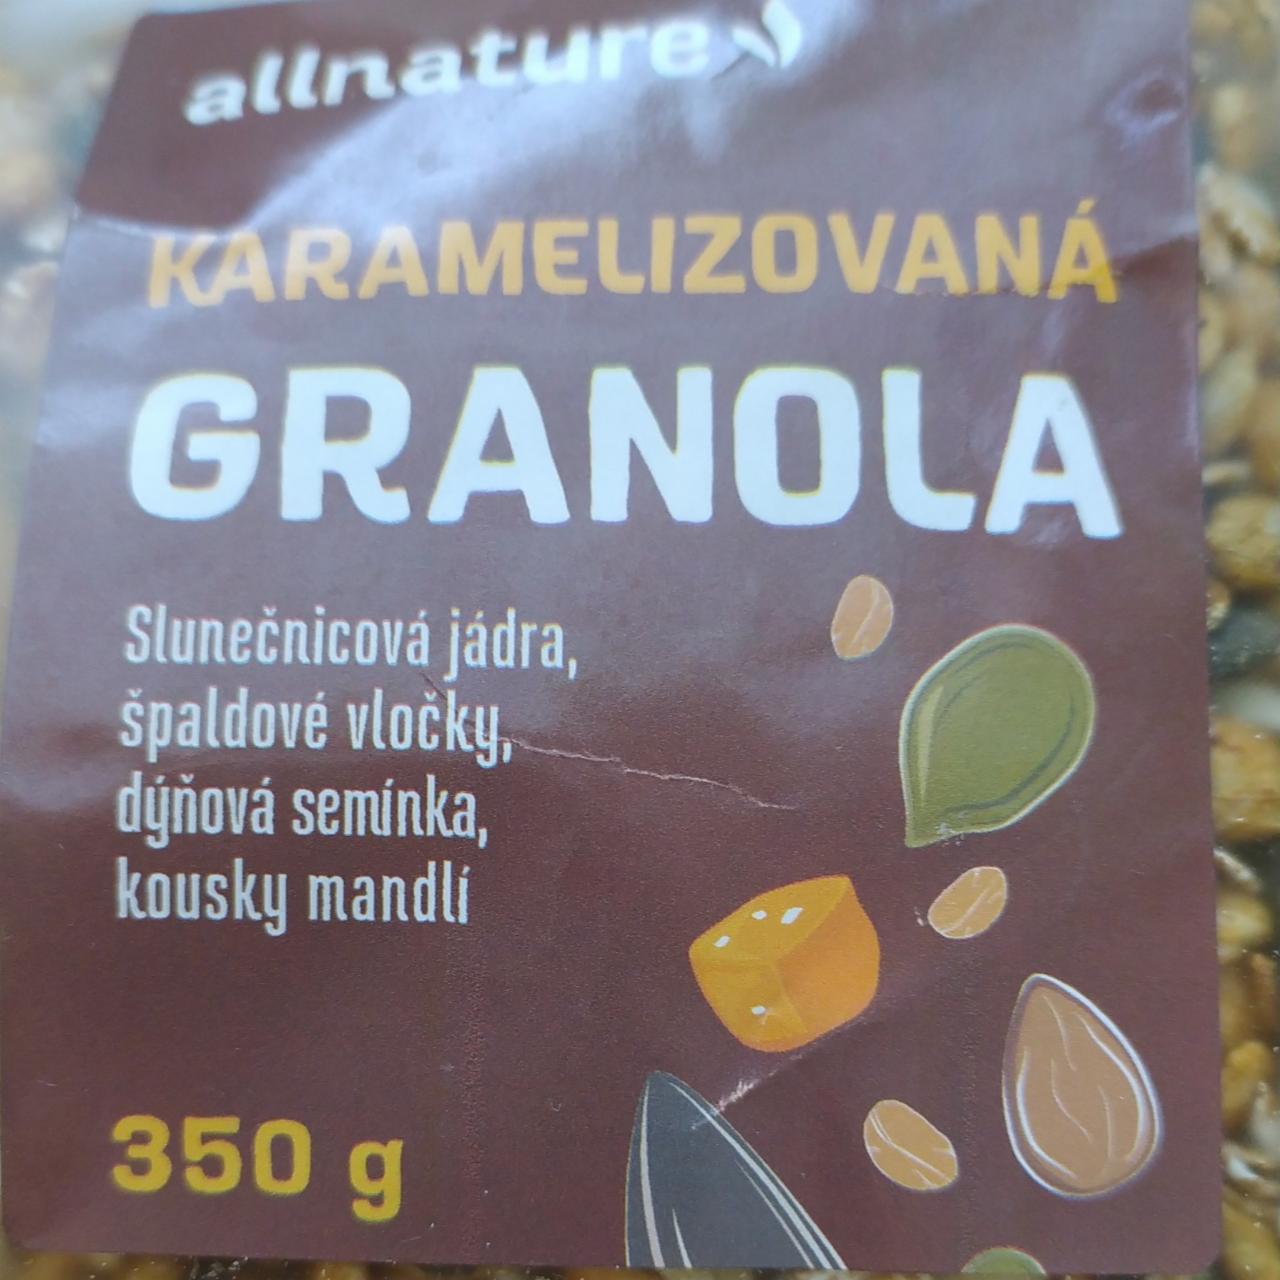 Fotografie - granola karamelizovana Allnature